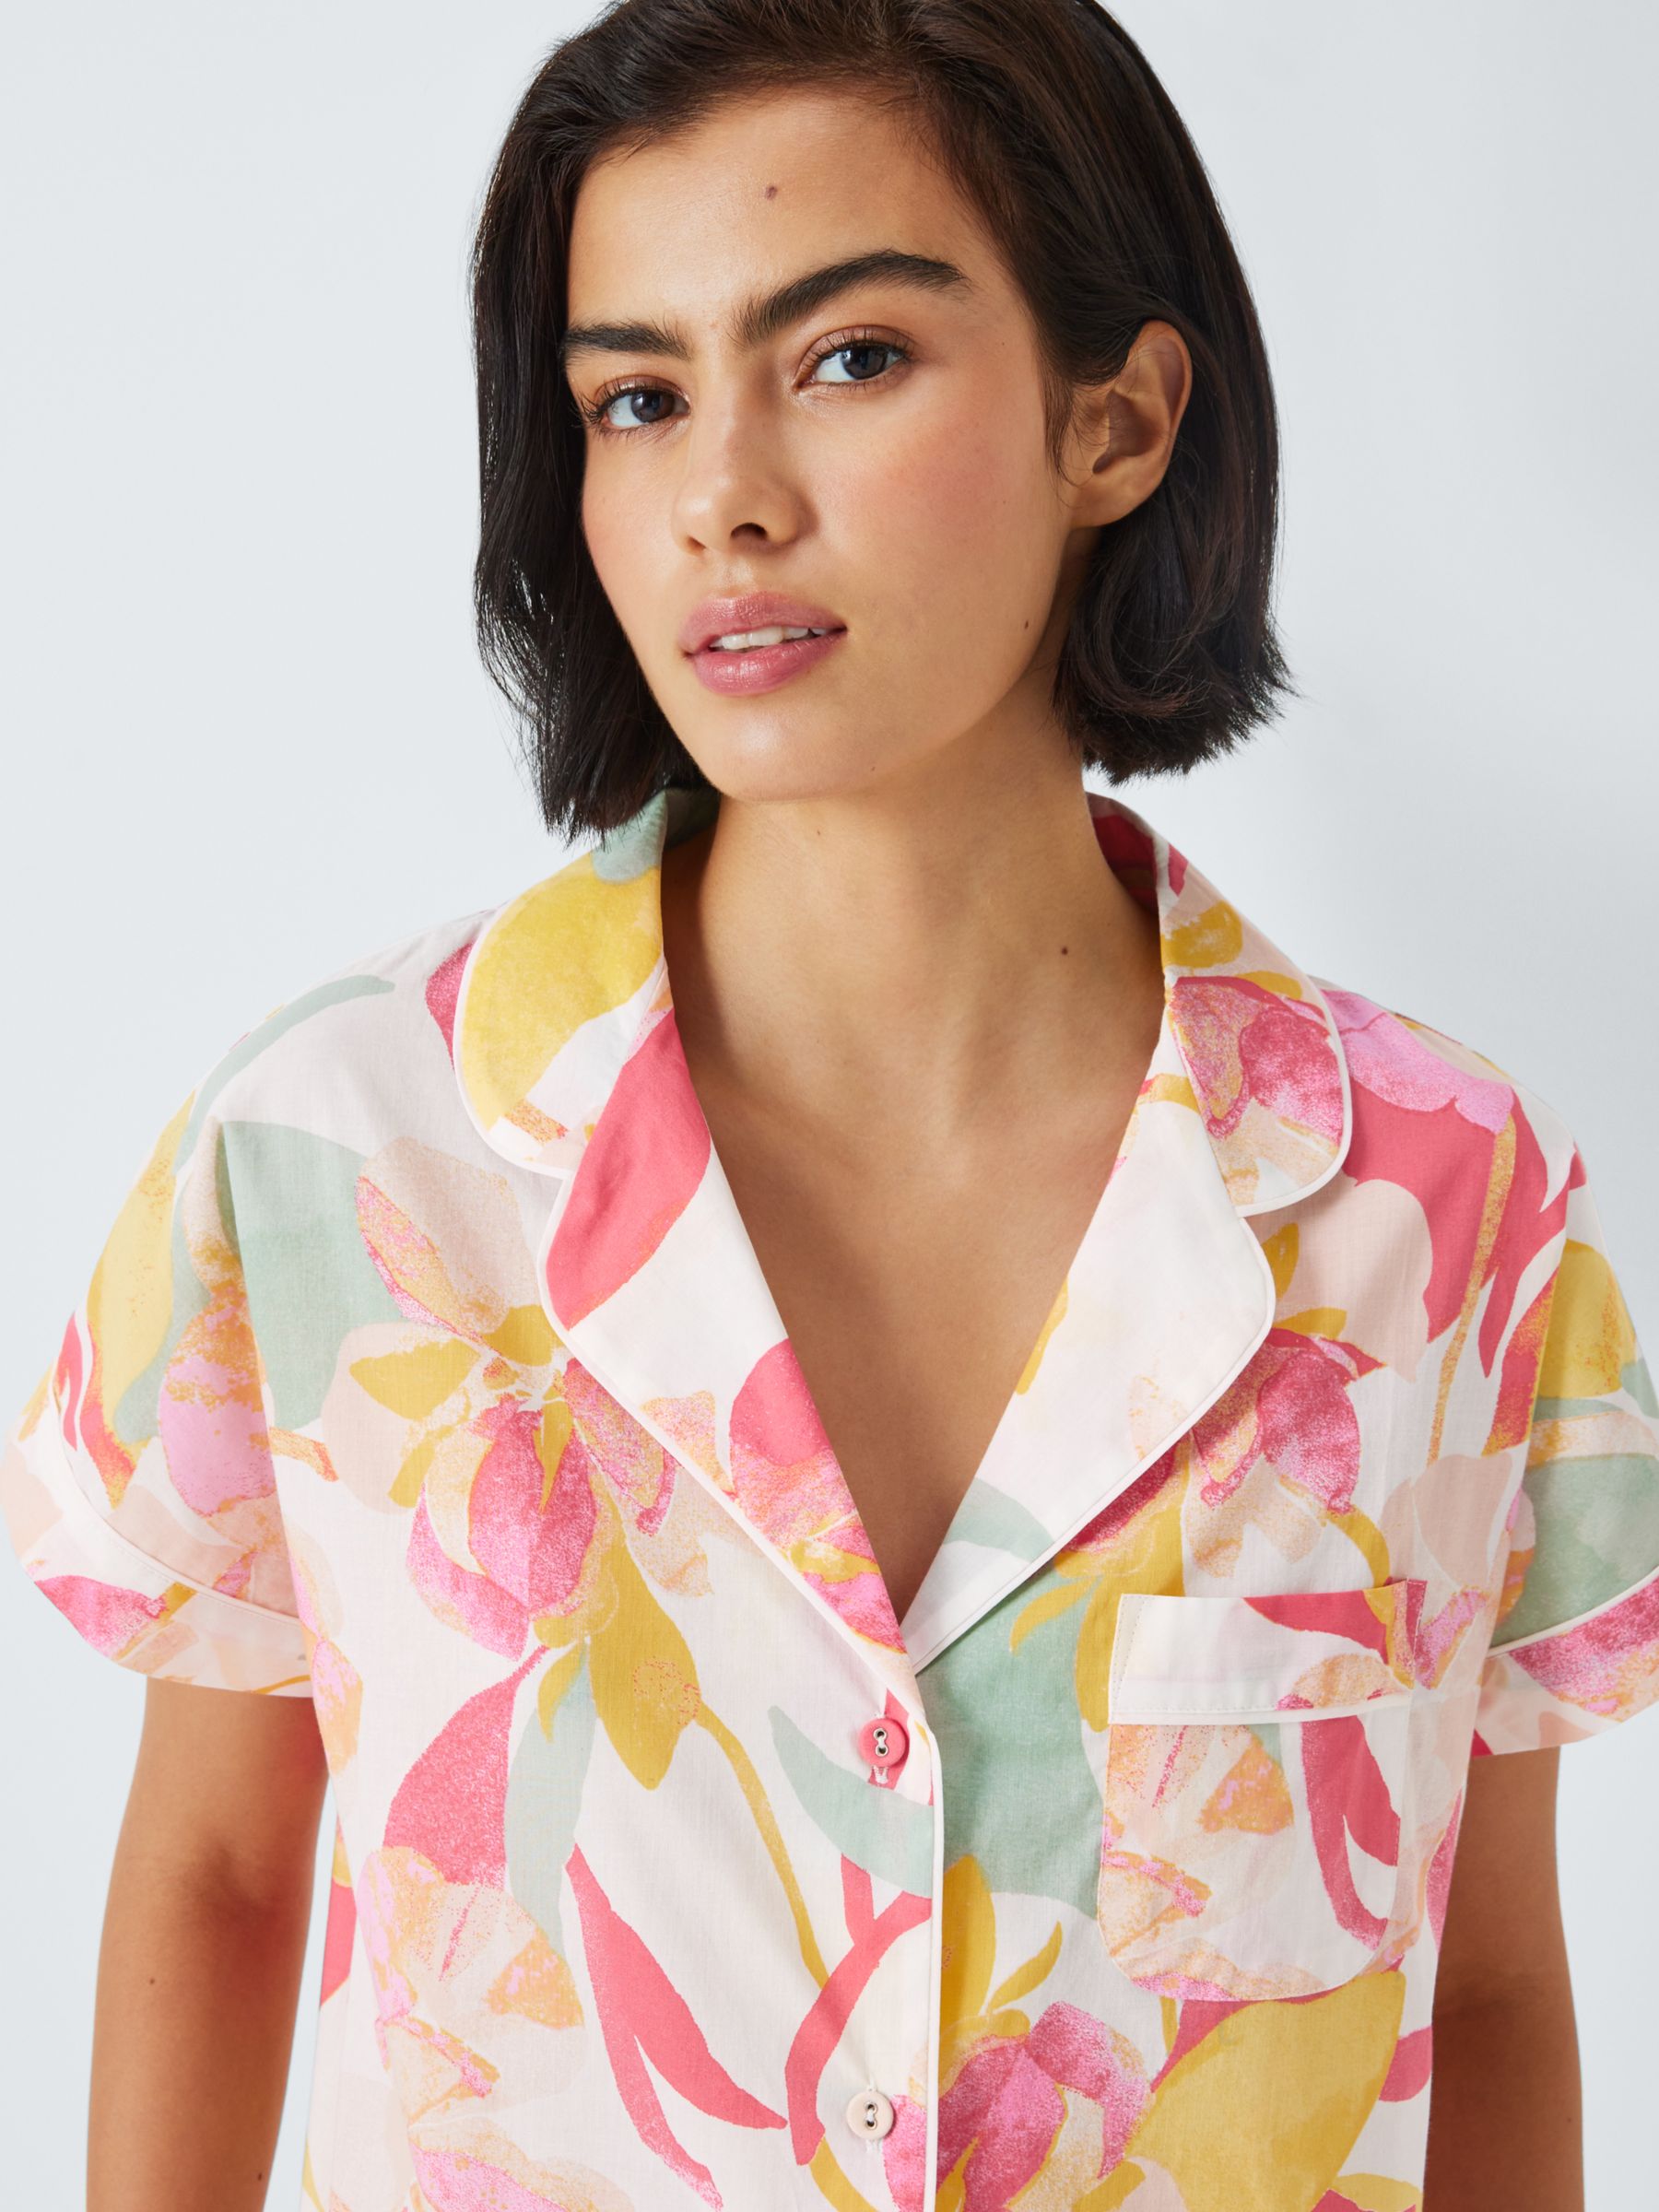 John Lewis Farrah Floral Shirt Cropped Pyjama Set, Ivory/Coral, 16